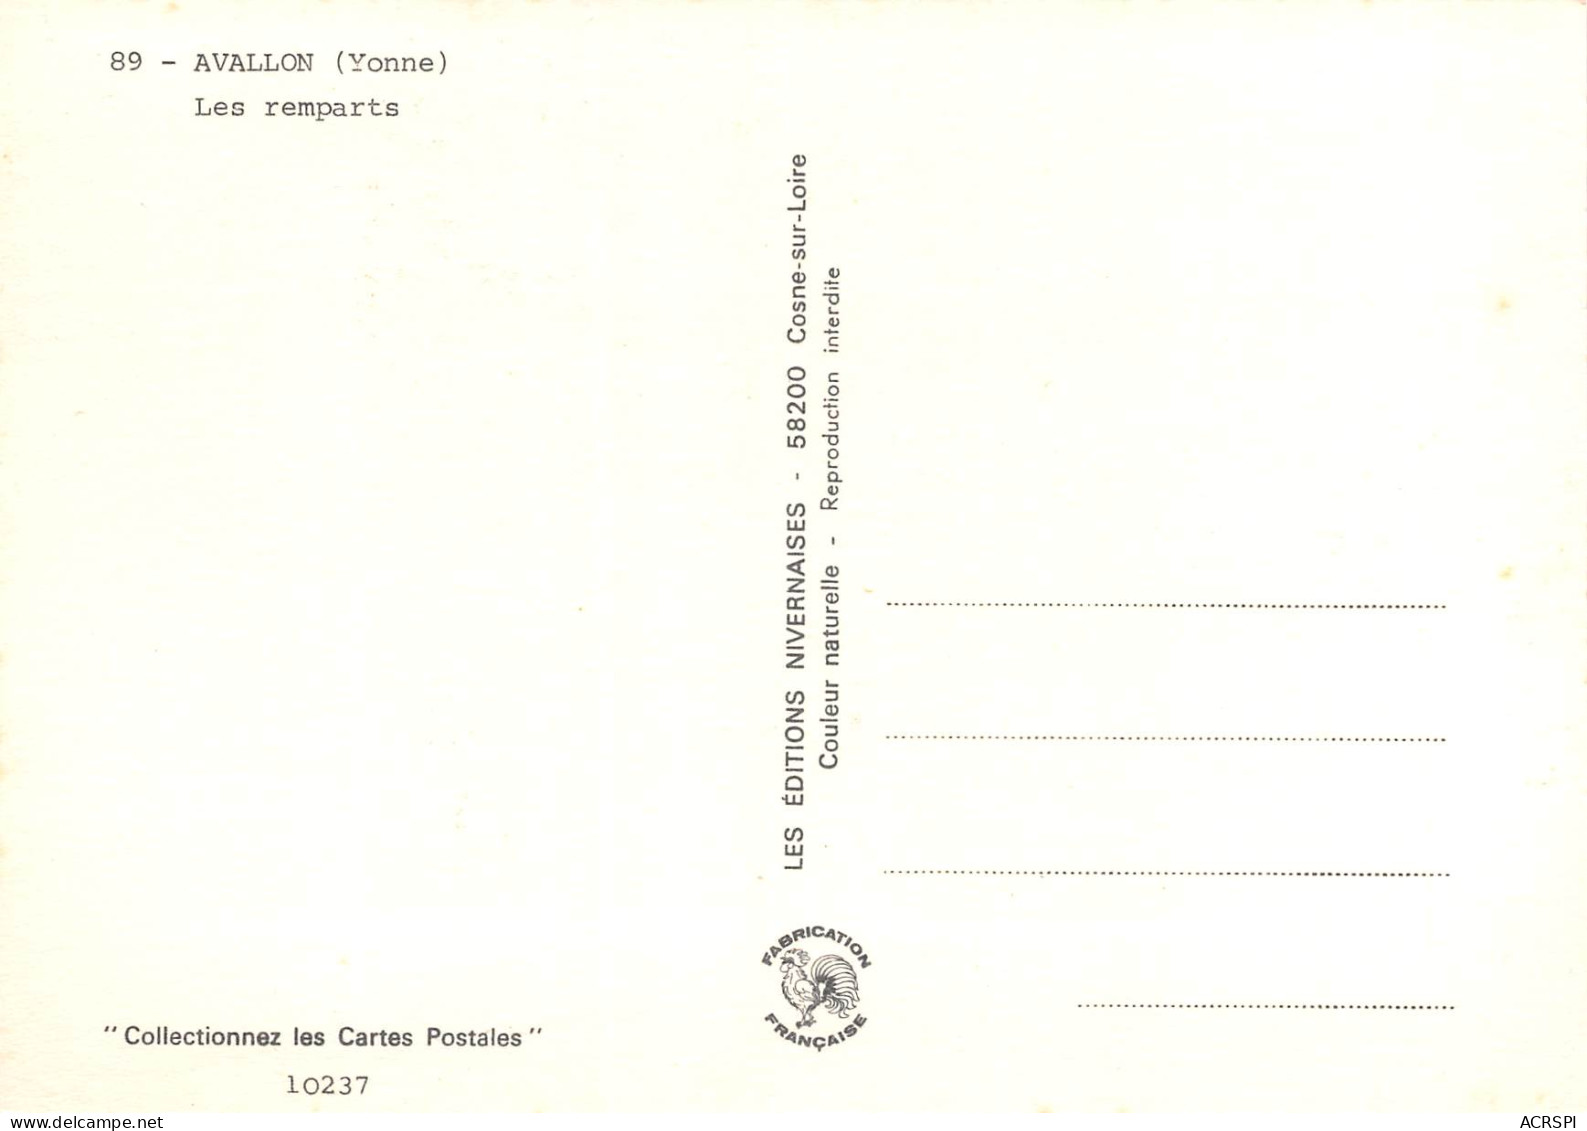 89 AVALLON Les Remparts Échauguette Tour Gaujard Carte Vierge Non Circulé édition Nivernaises (Scans R/V) N° 18 \MO7049 - Avallon